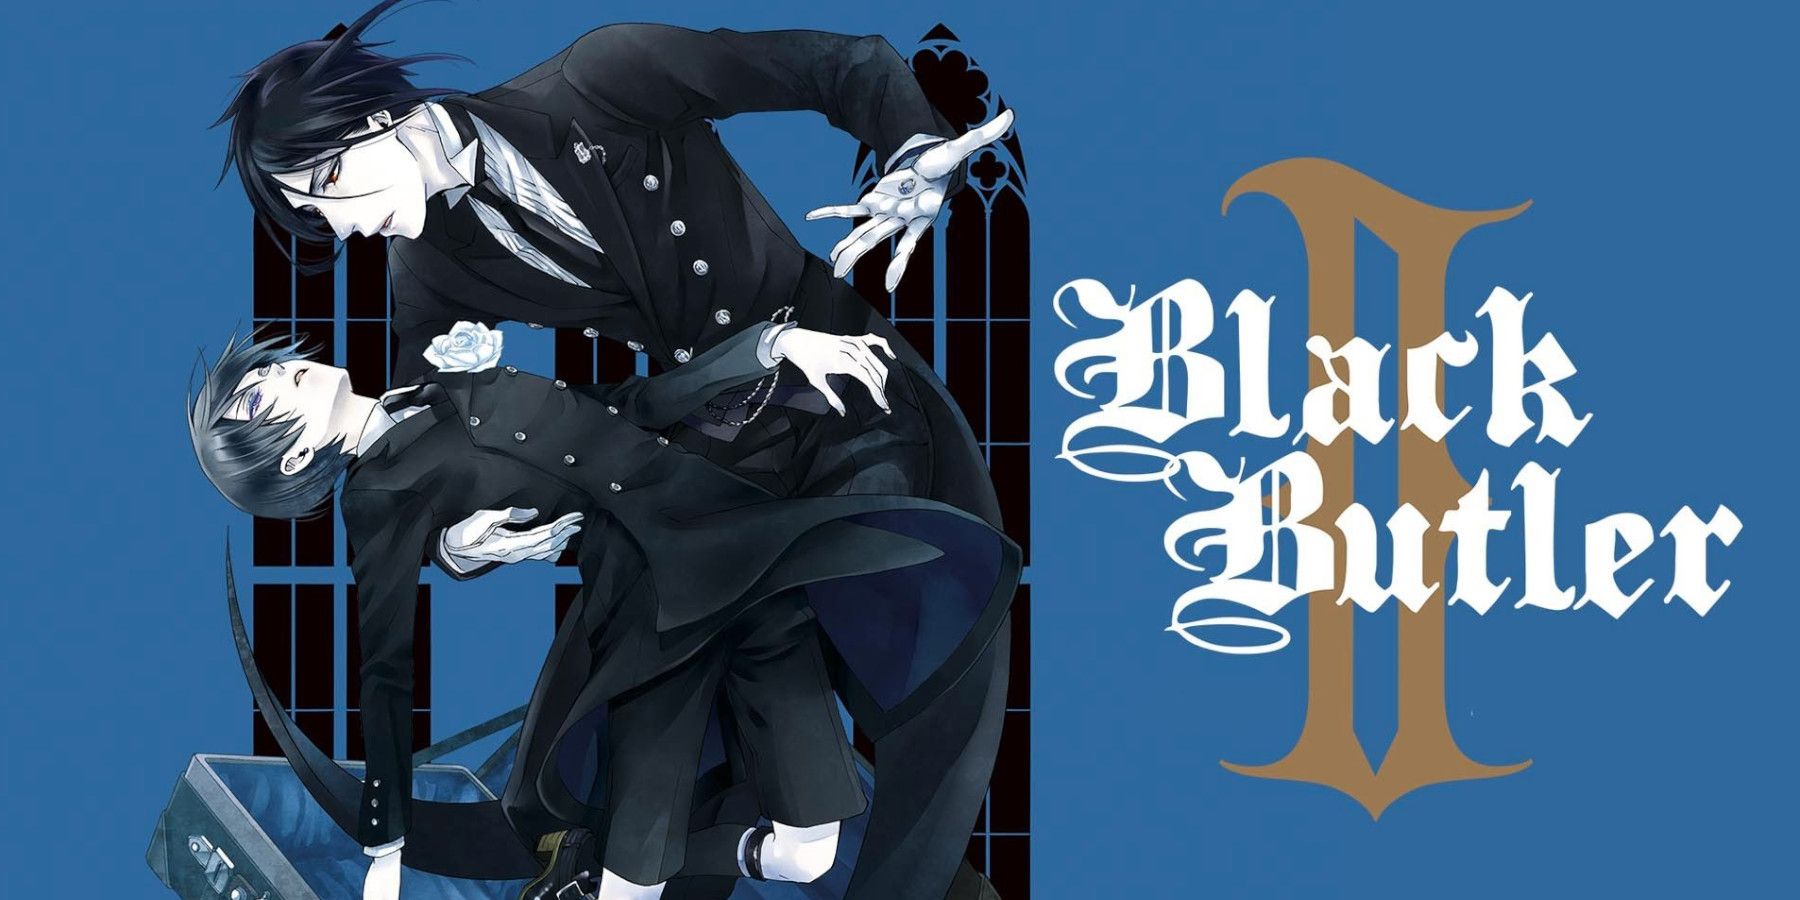 Black Butler! Manga vs Anime, continuity.